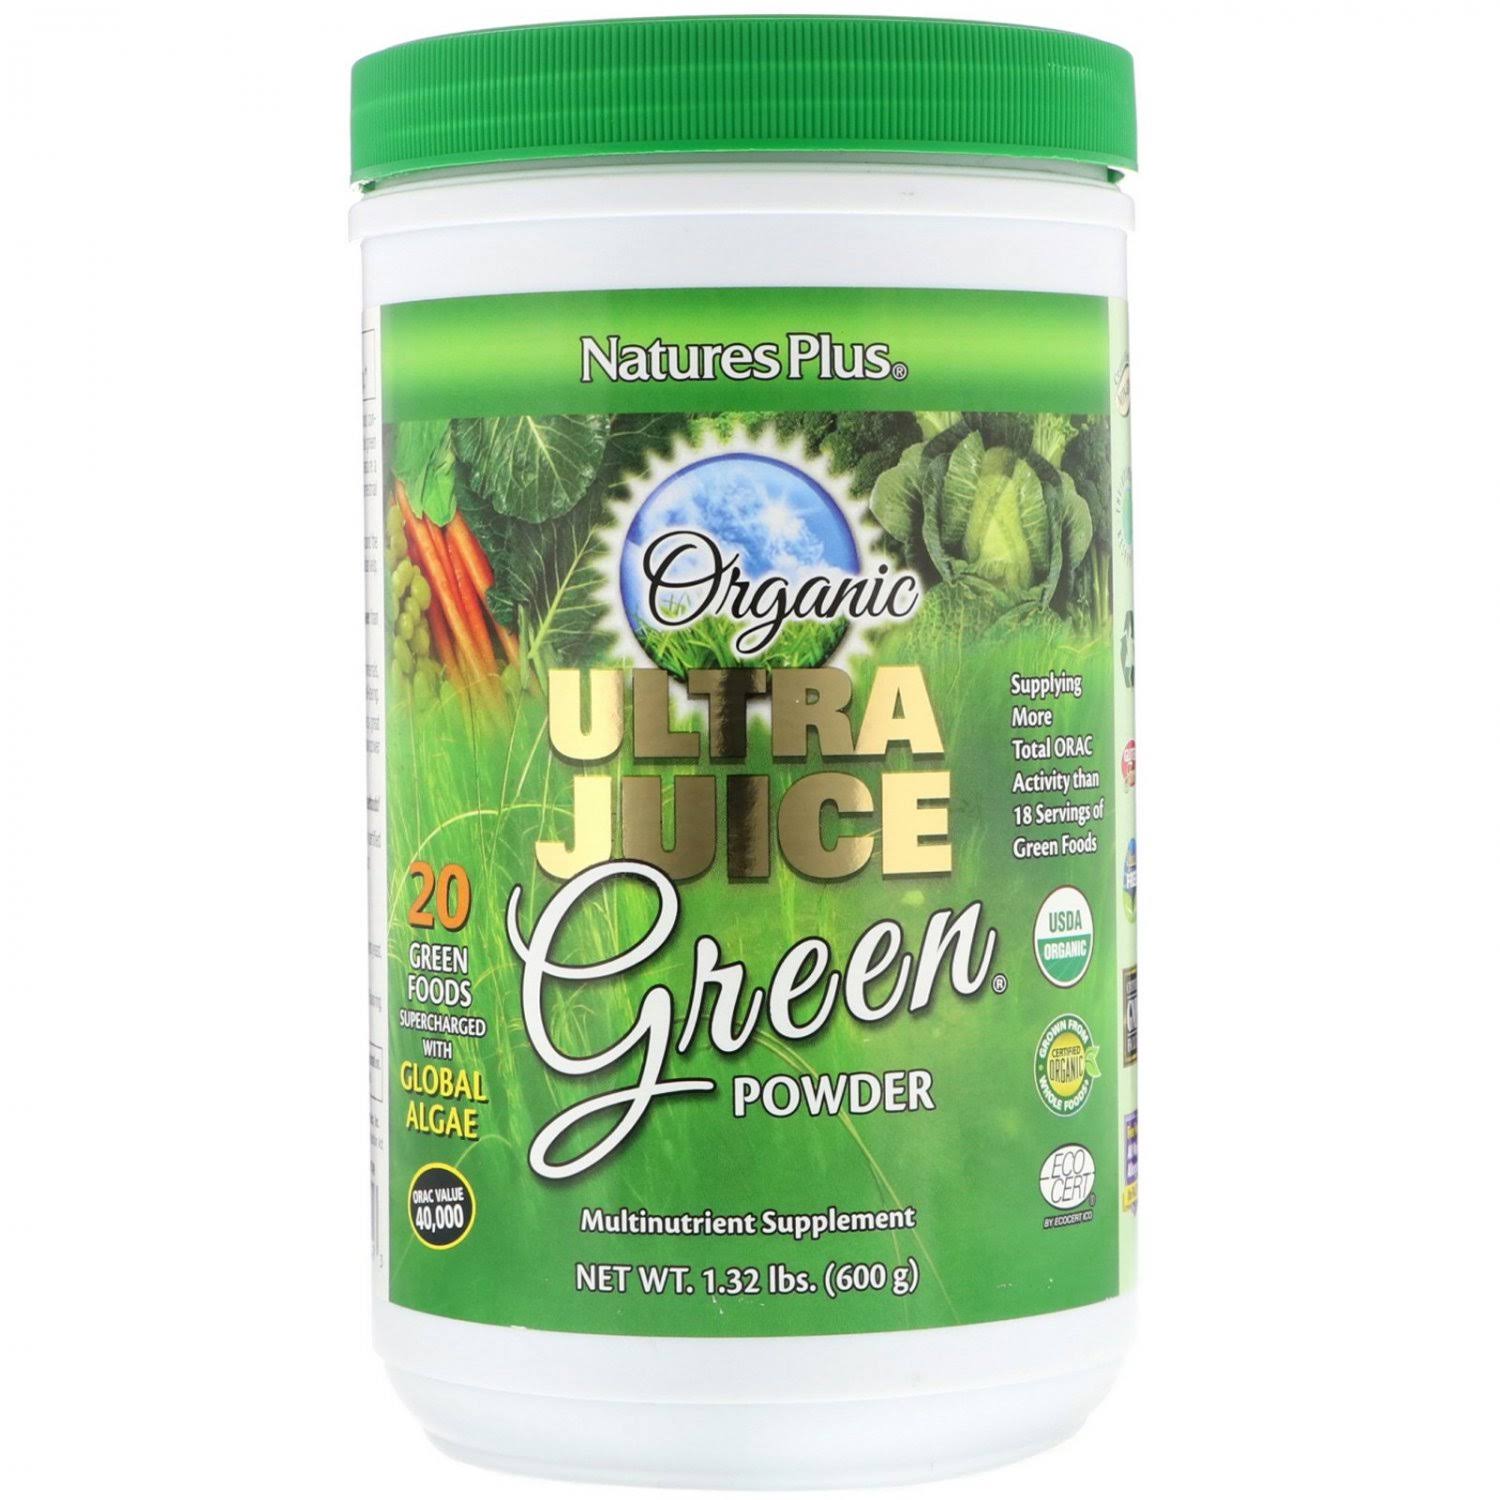 Nature's Plus Organic Ultra Juice Green Powder - 15 Pack